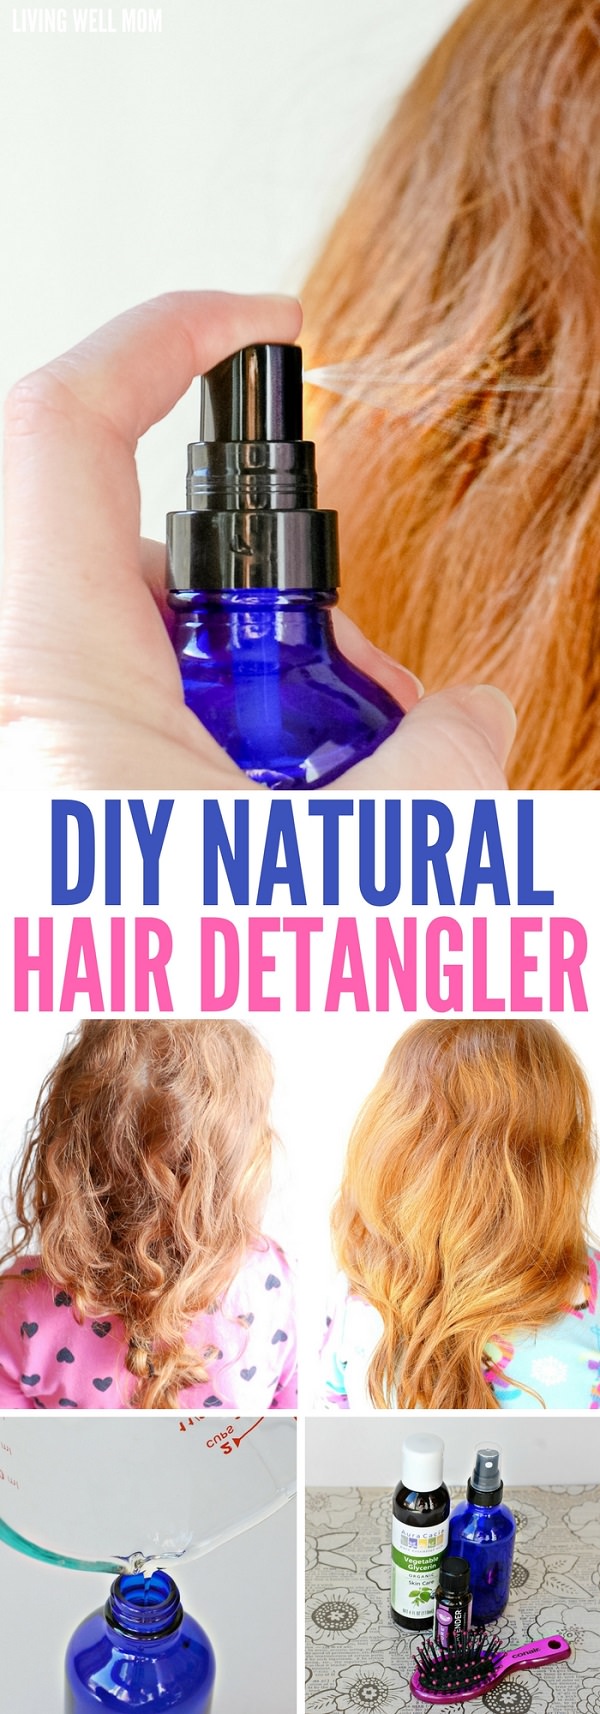 DIY-Natural-Hair-Detangler-Collage